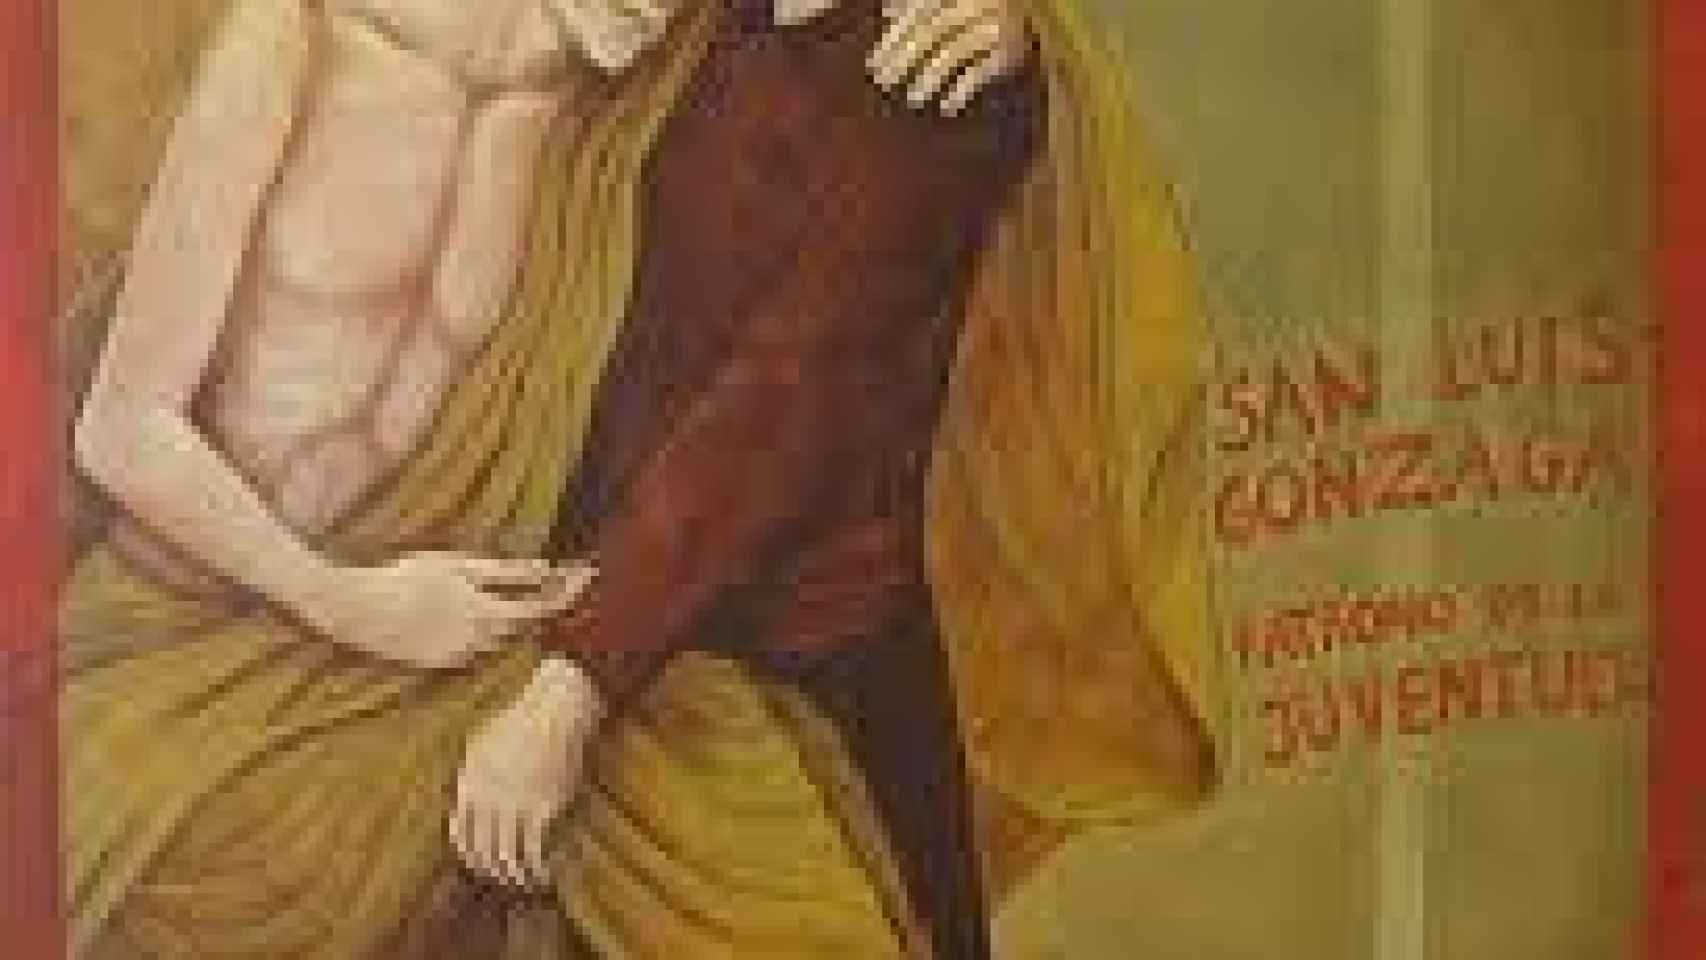 San Luis Gonzaga